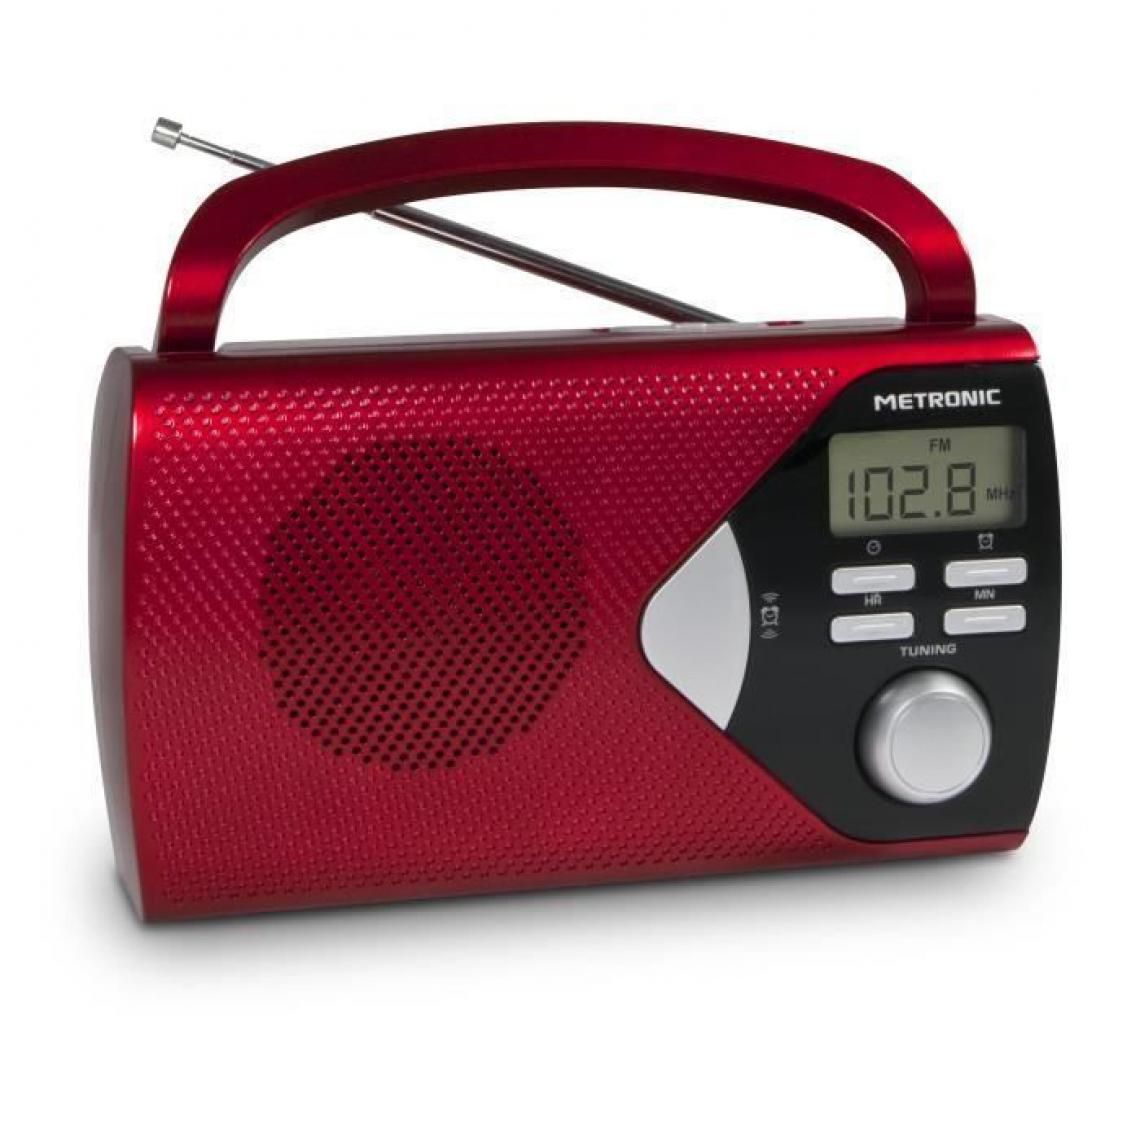 Metronic - MET 477201 Radio portable Rouge - Radio